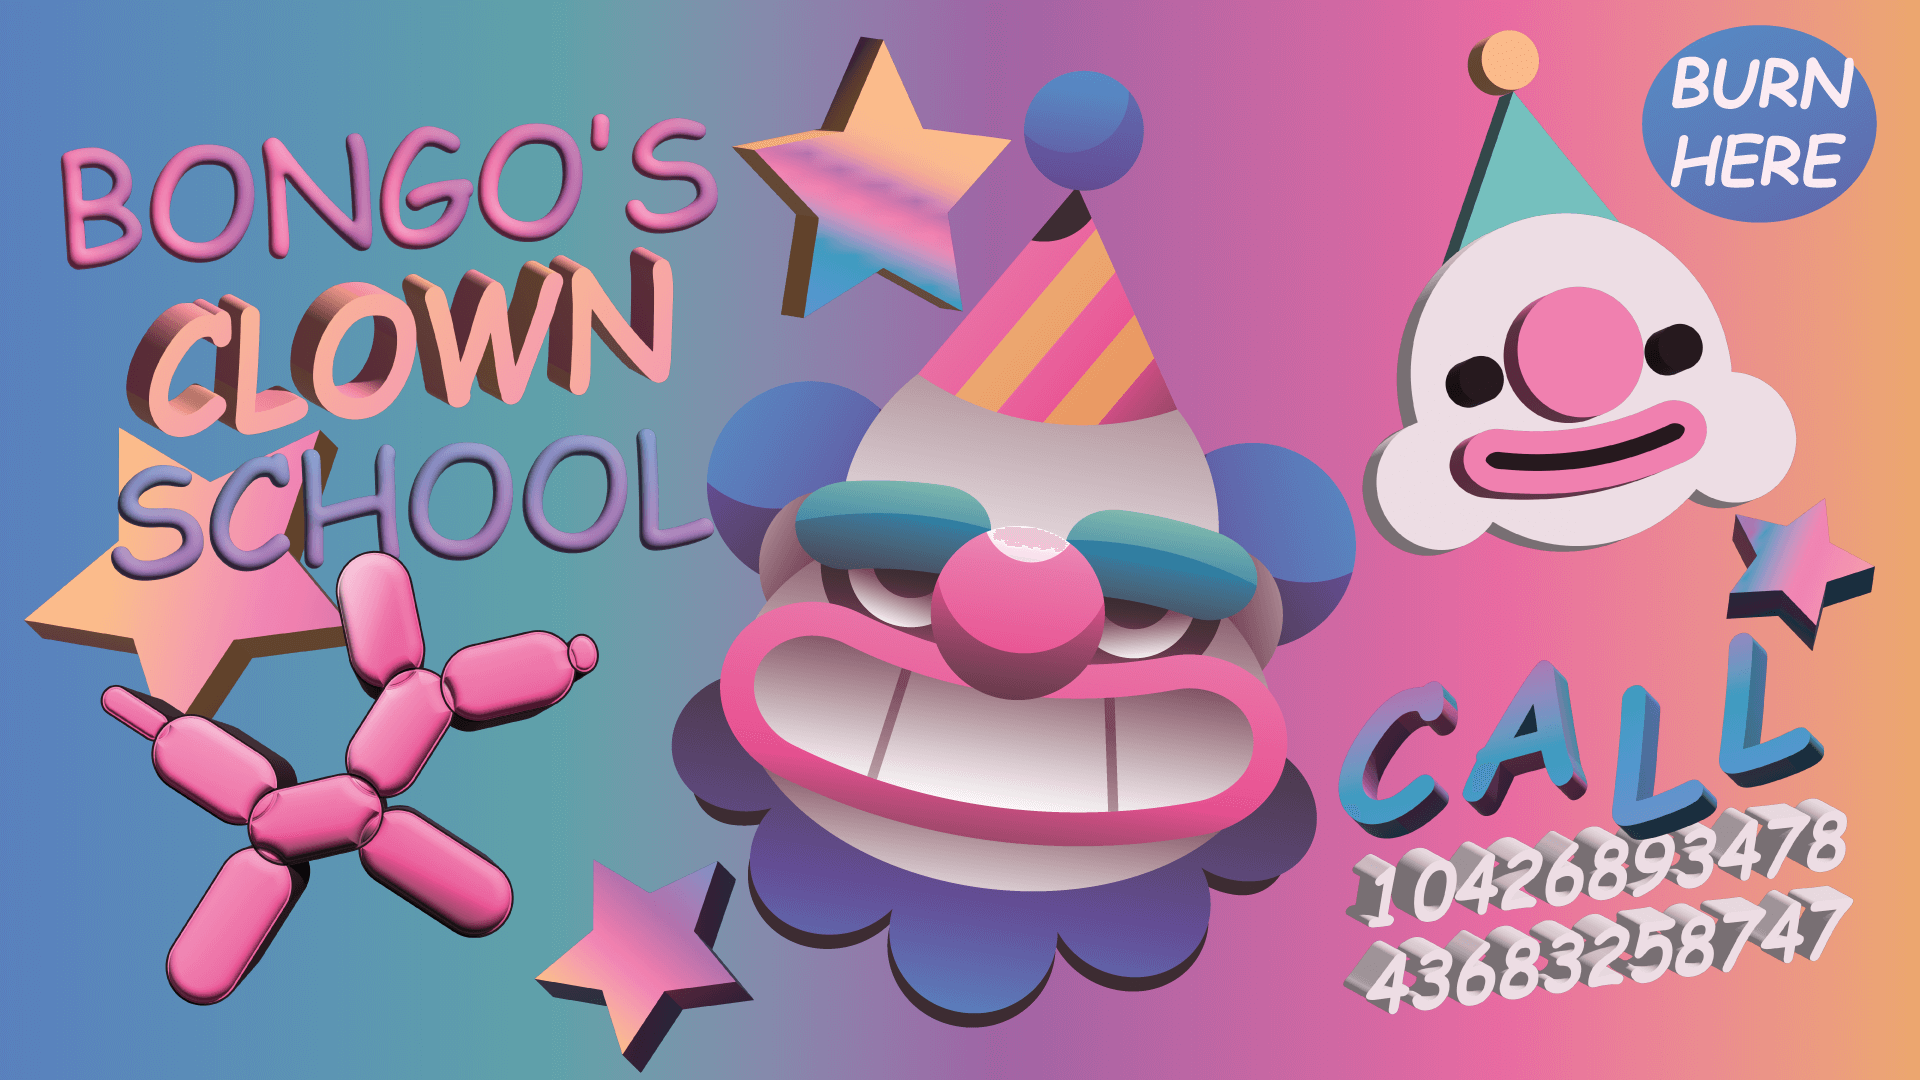 Bongo's Clown School